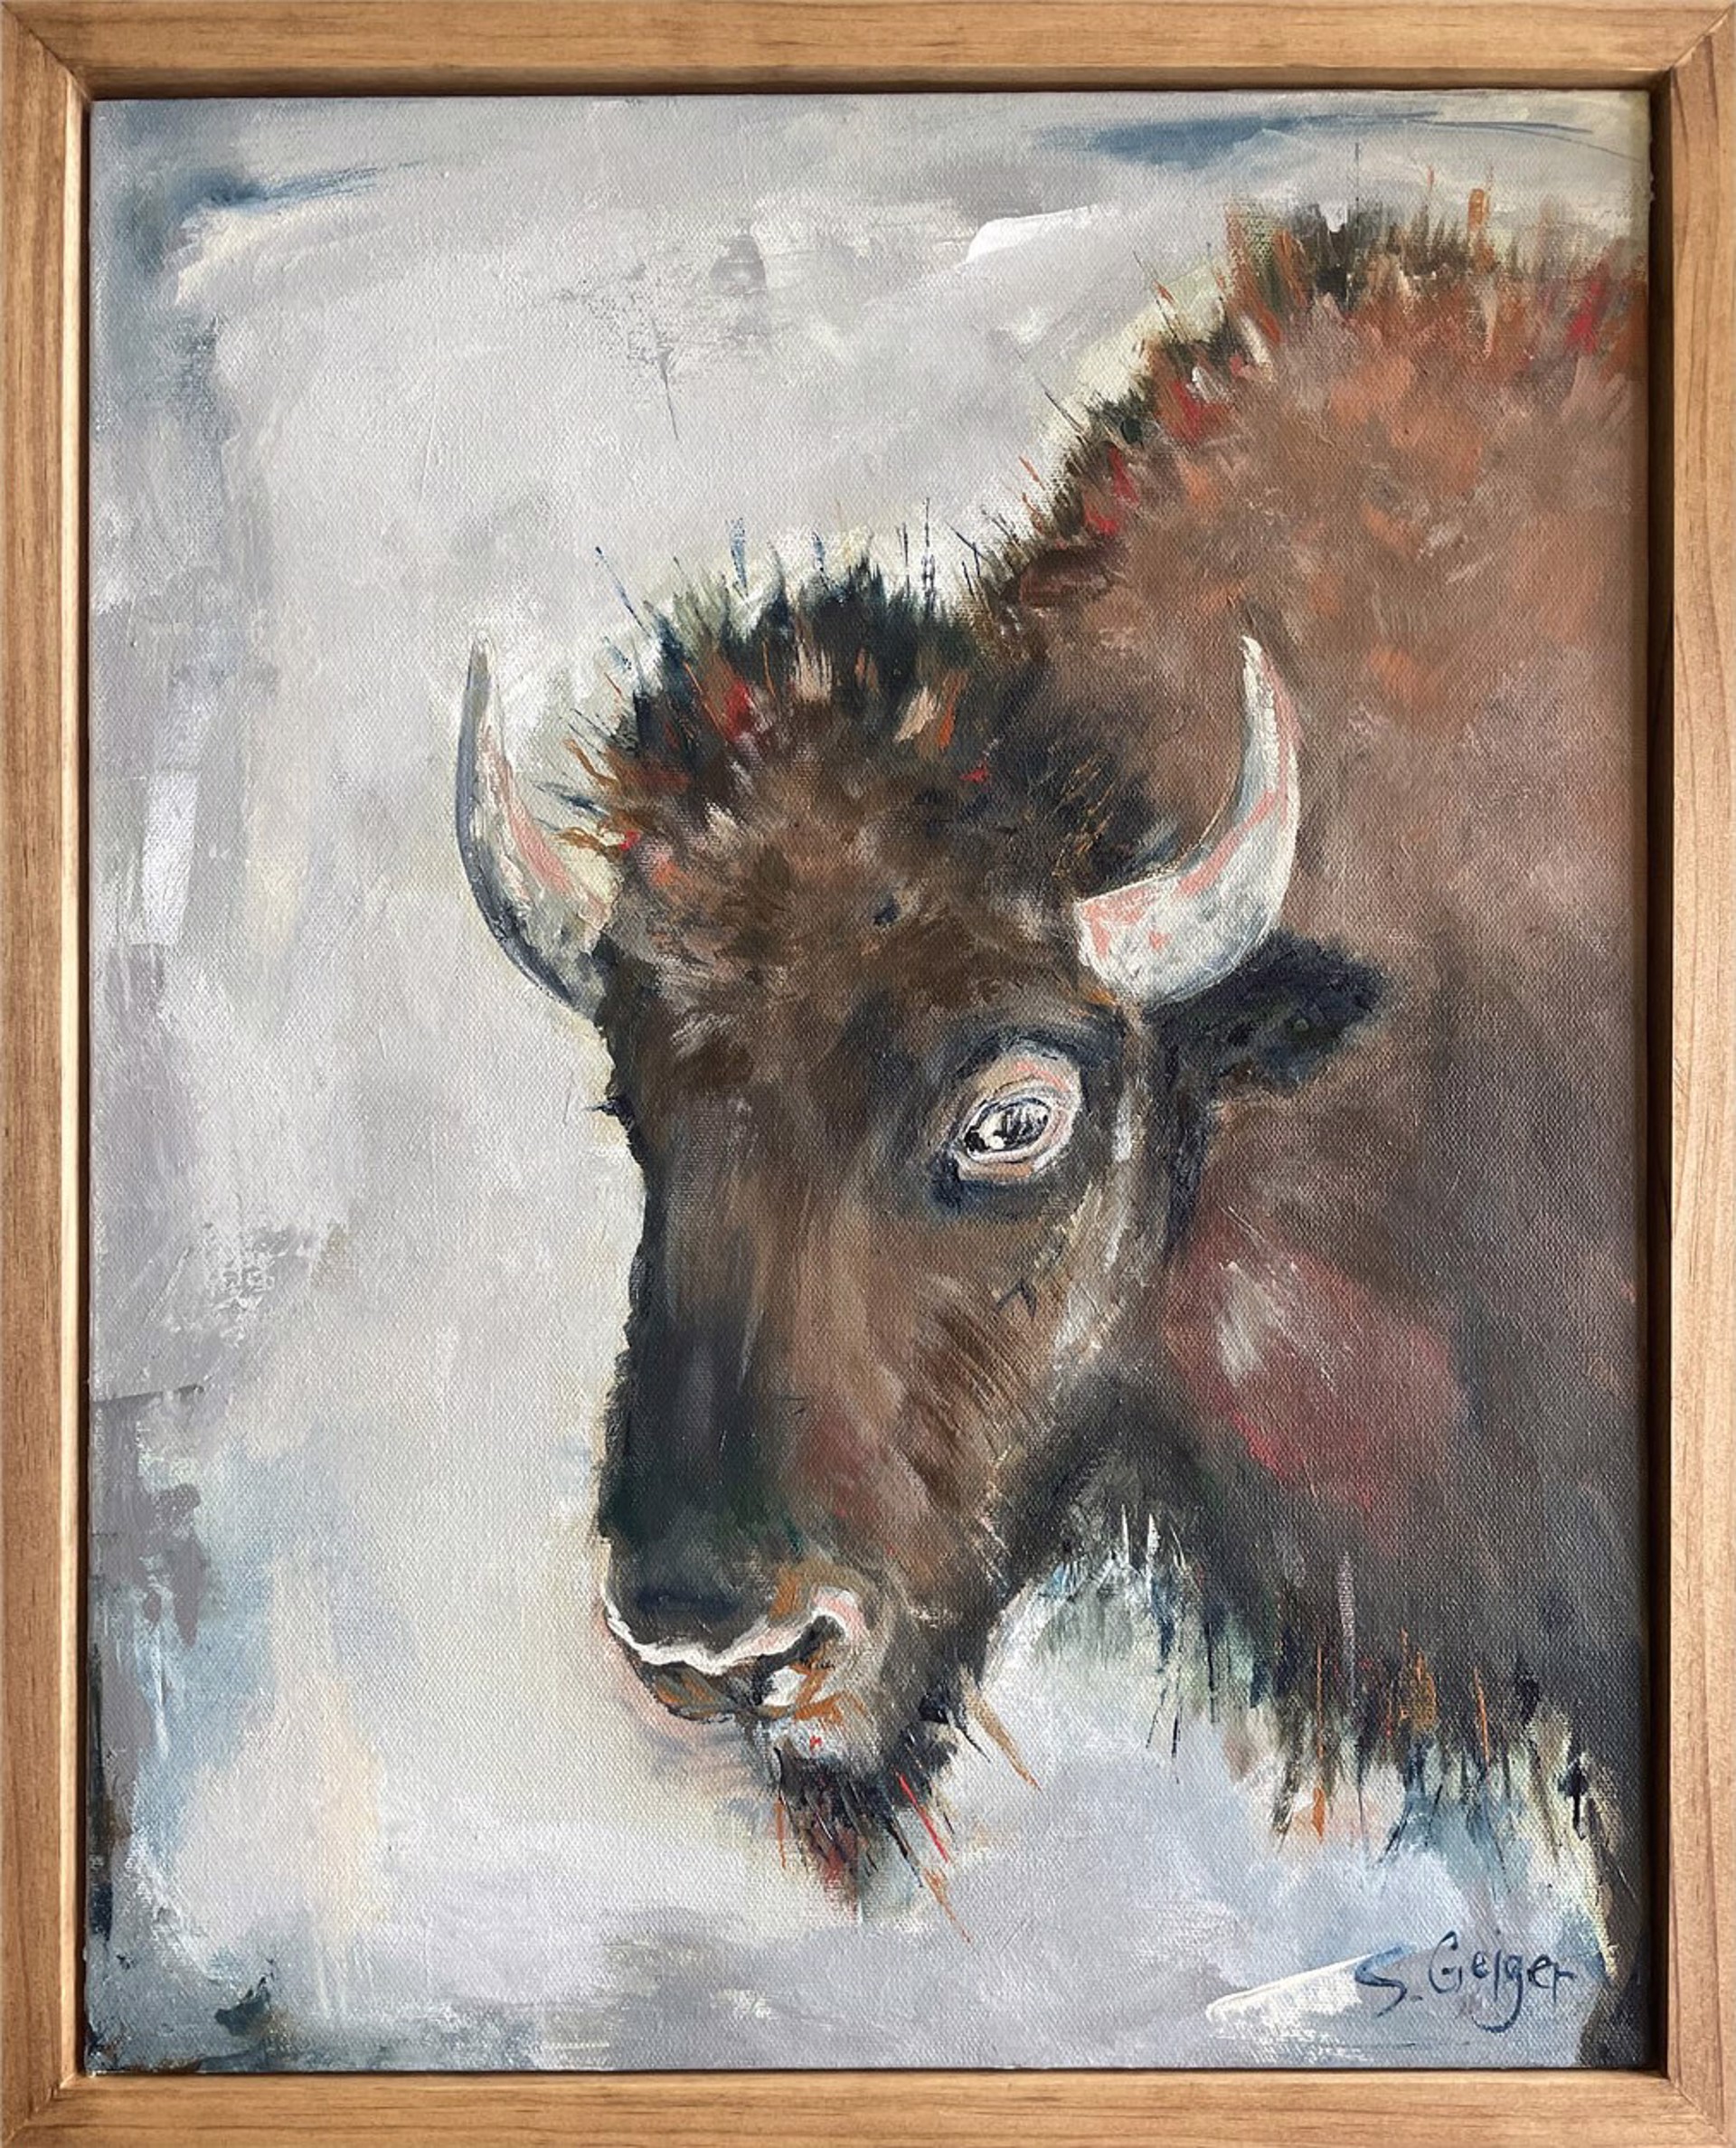 American Bison by Susan Geiger